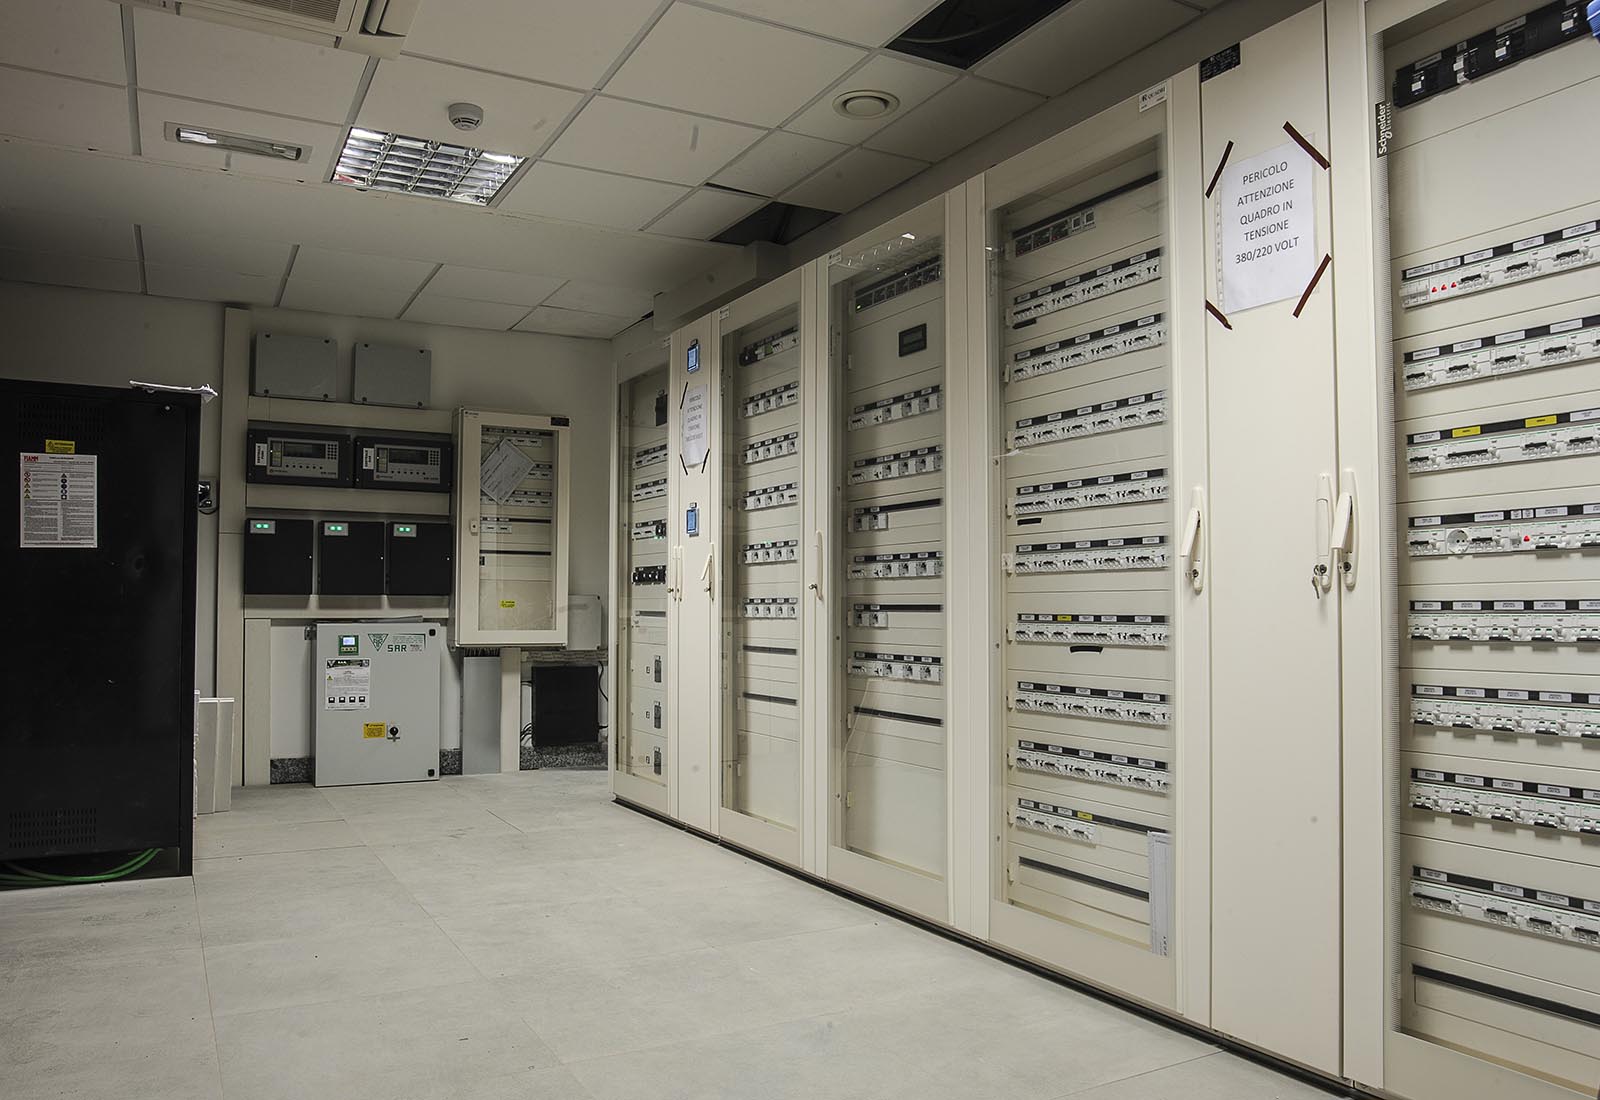 Underground garage in Adriano street Milan - The electric panels room